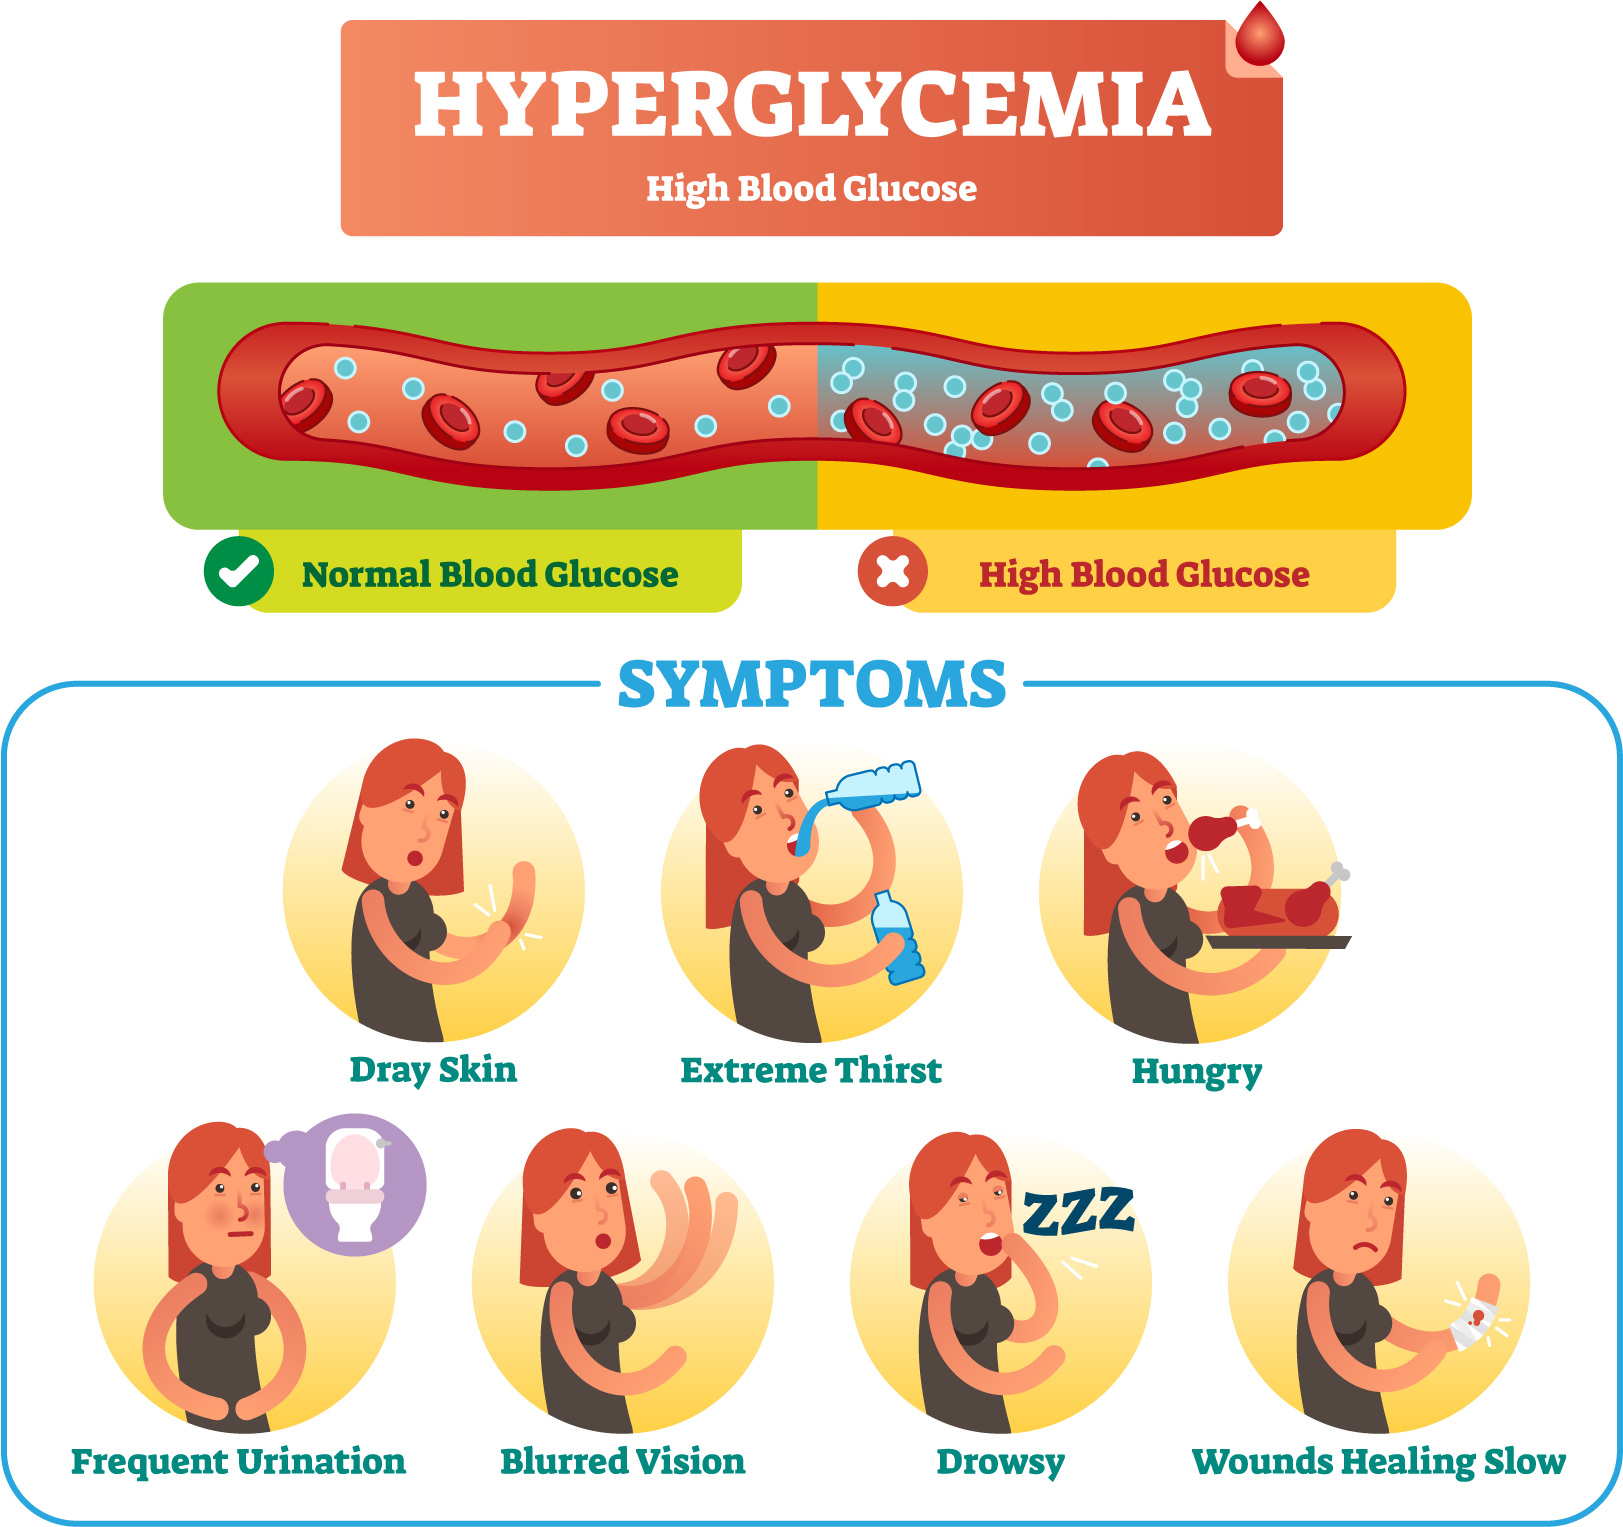 Symptoms of high blood glucose